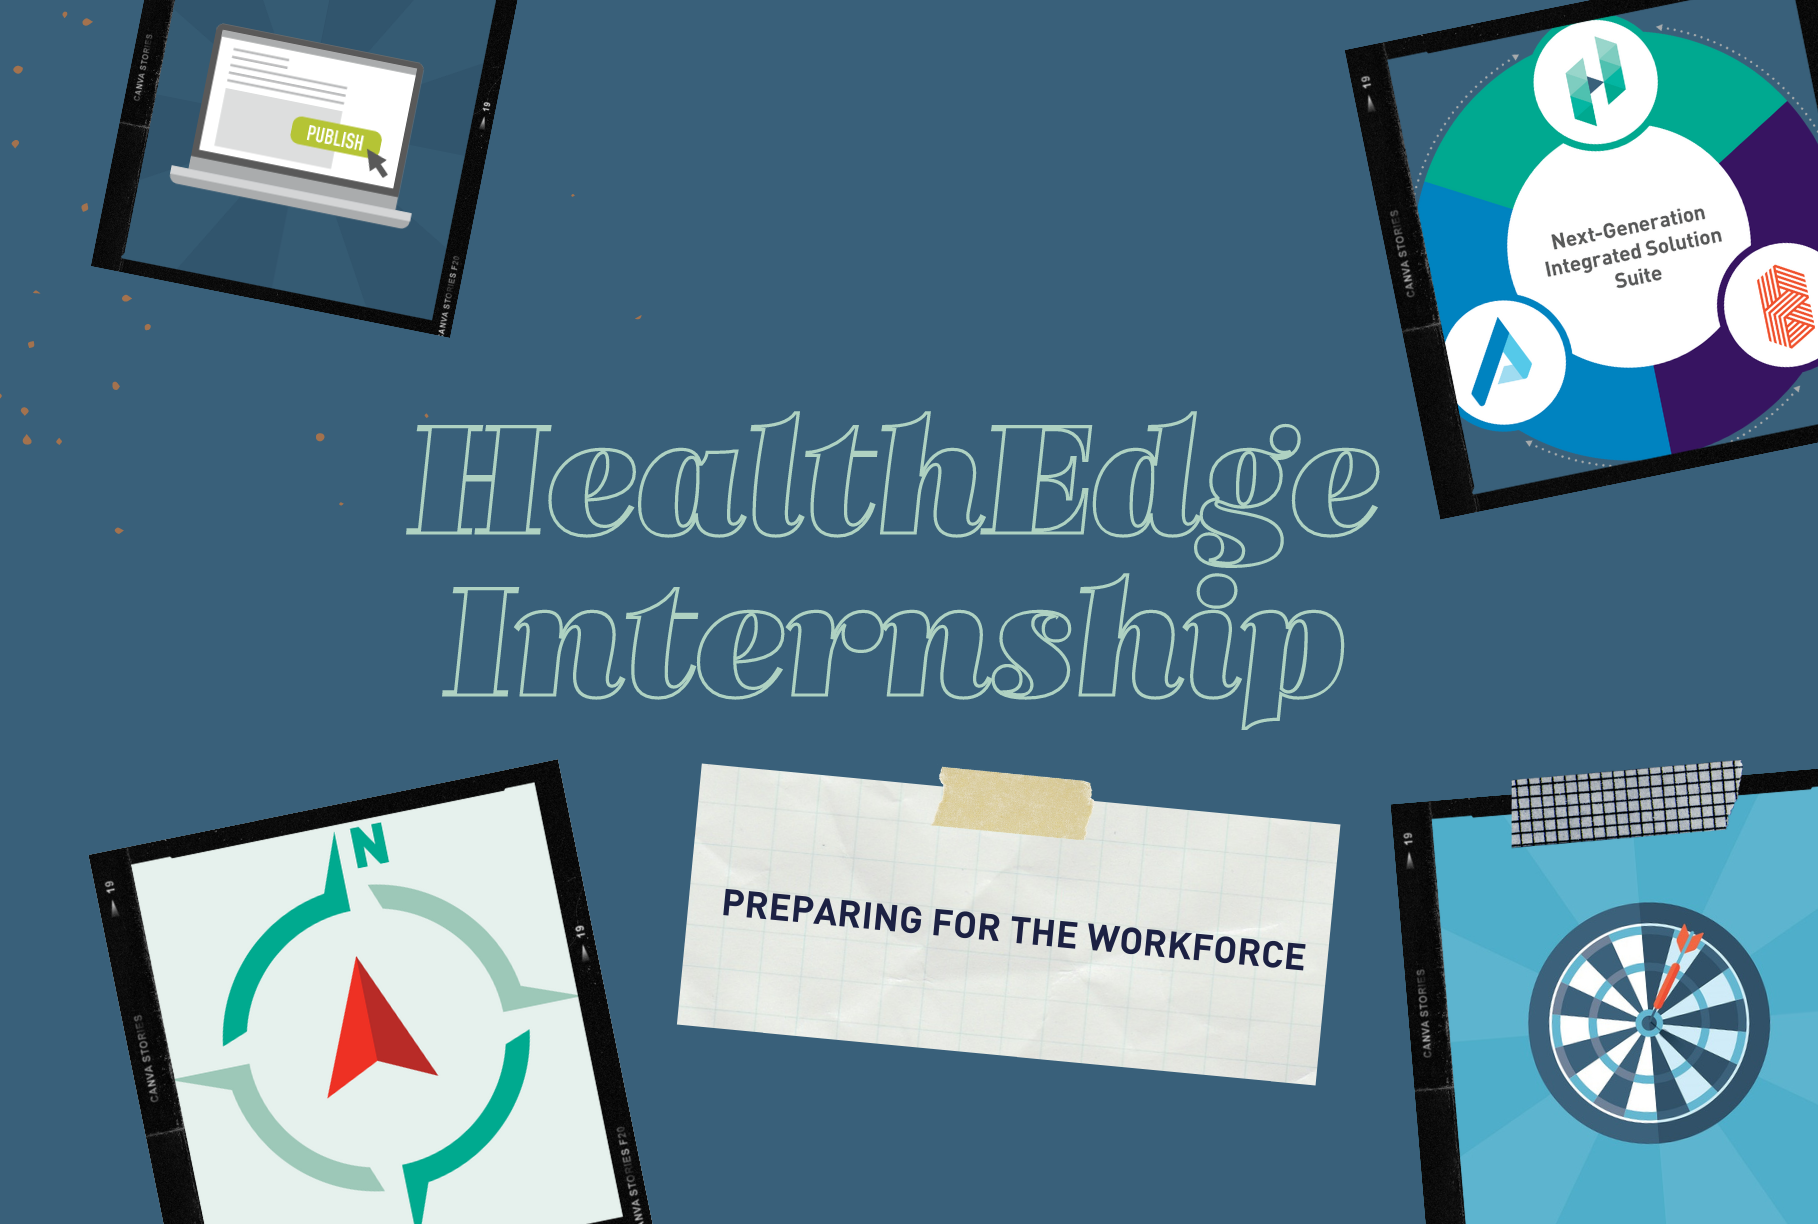 HealthEdge Internship: Preparing for the Workforce